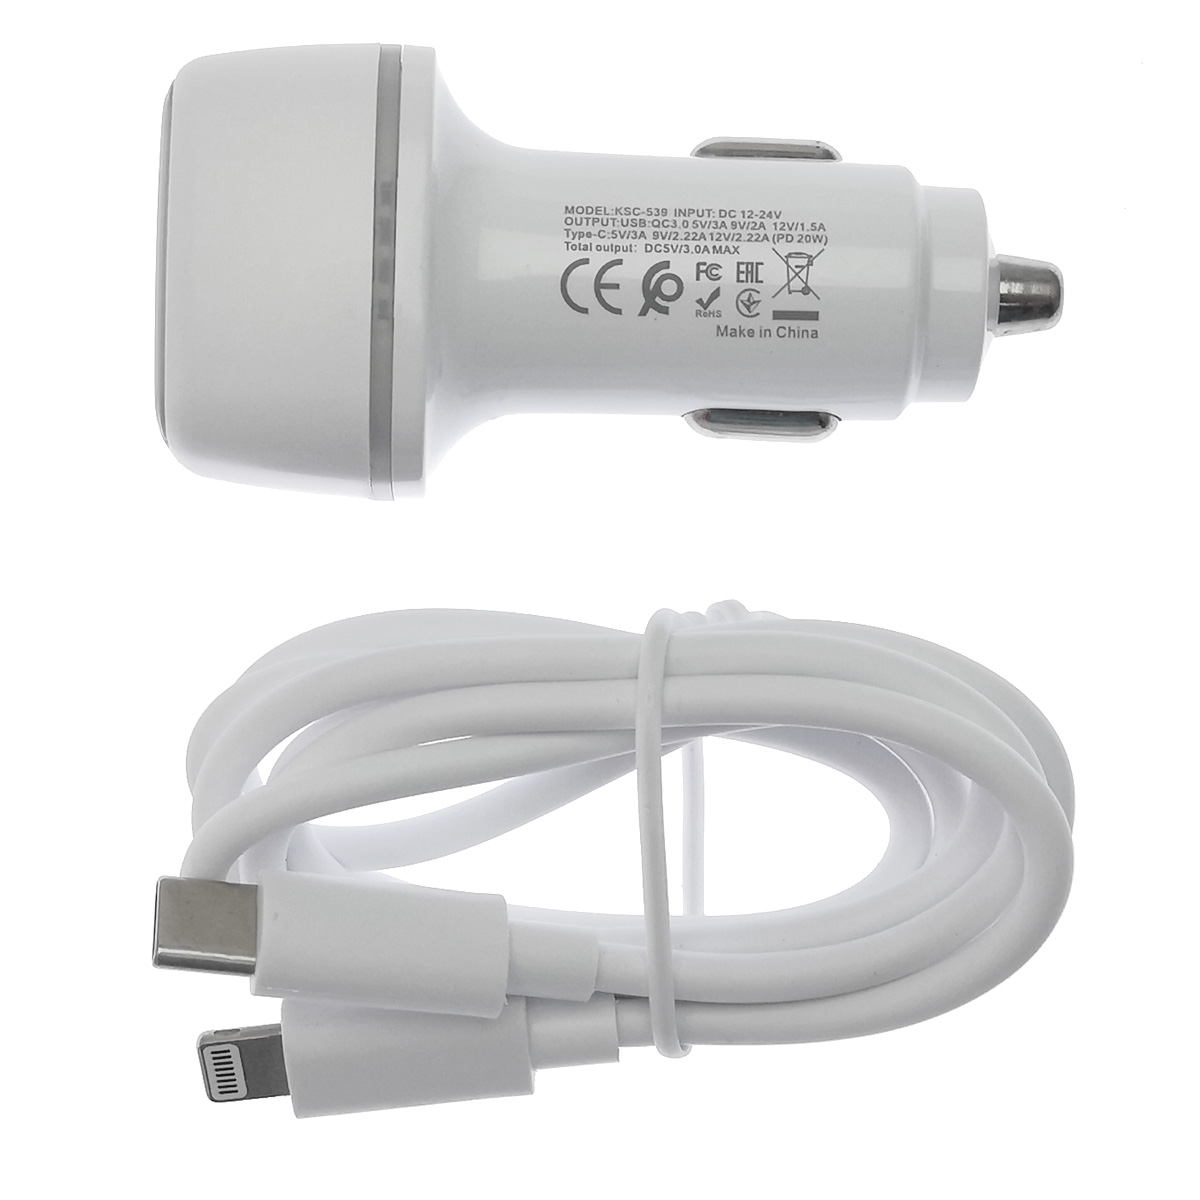 АЗУ (Автомобильное зарядное устройство) KAKU KSC-540 c кабелем USB Type C на APPLE Lightning 8 pin, 20W, длина 1 метр, цвет белый